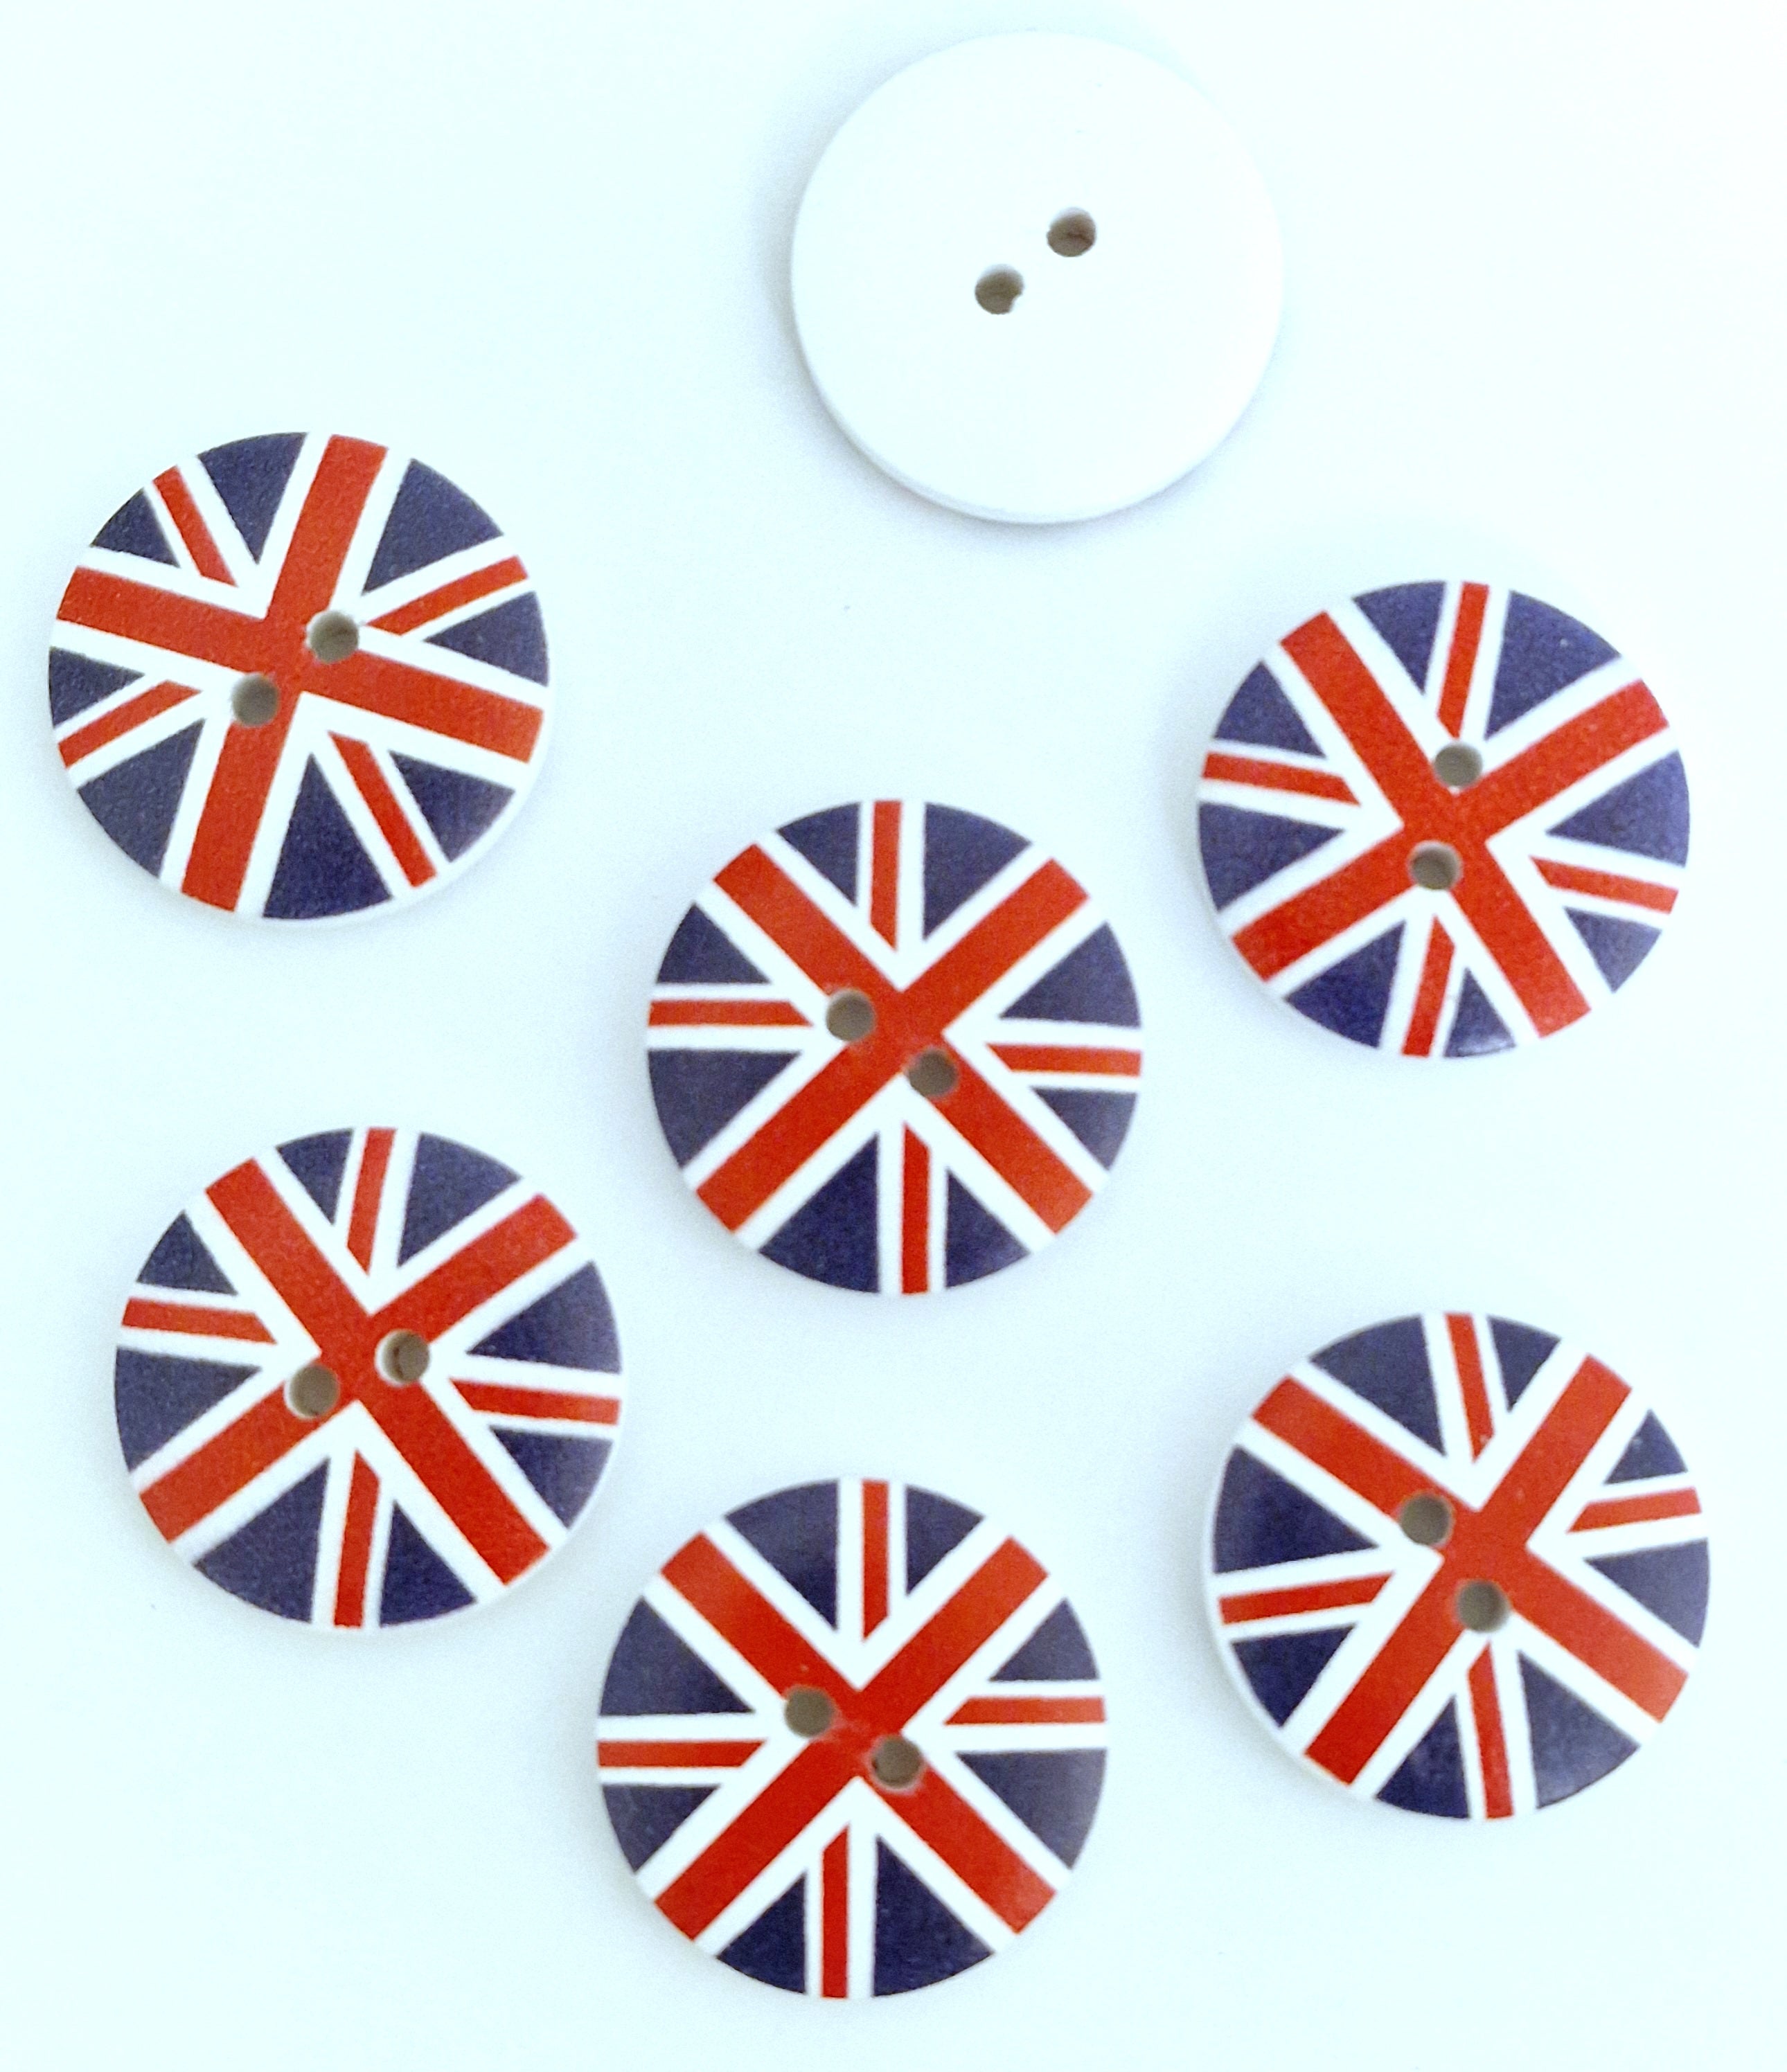 MajorCrafts 24pcs 25mm Union Jack British Flag Round 2 Holes Wood Sewing Buttons